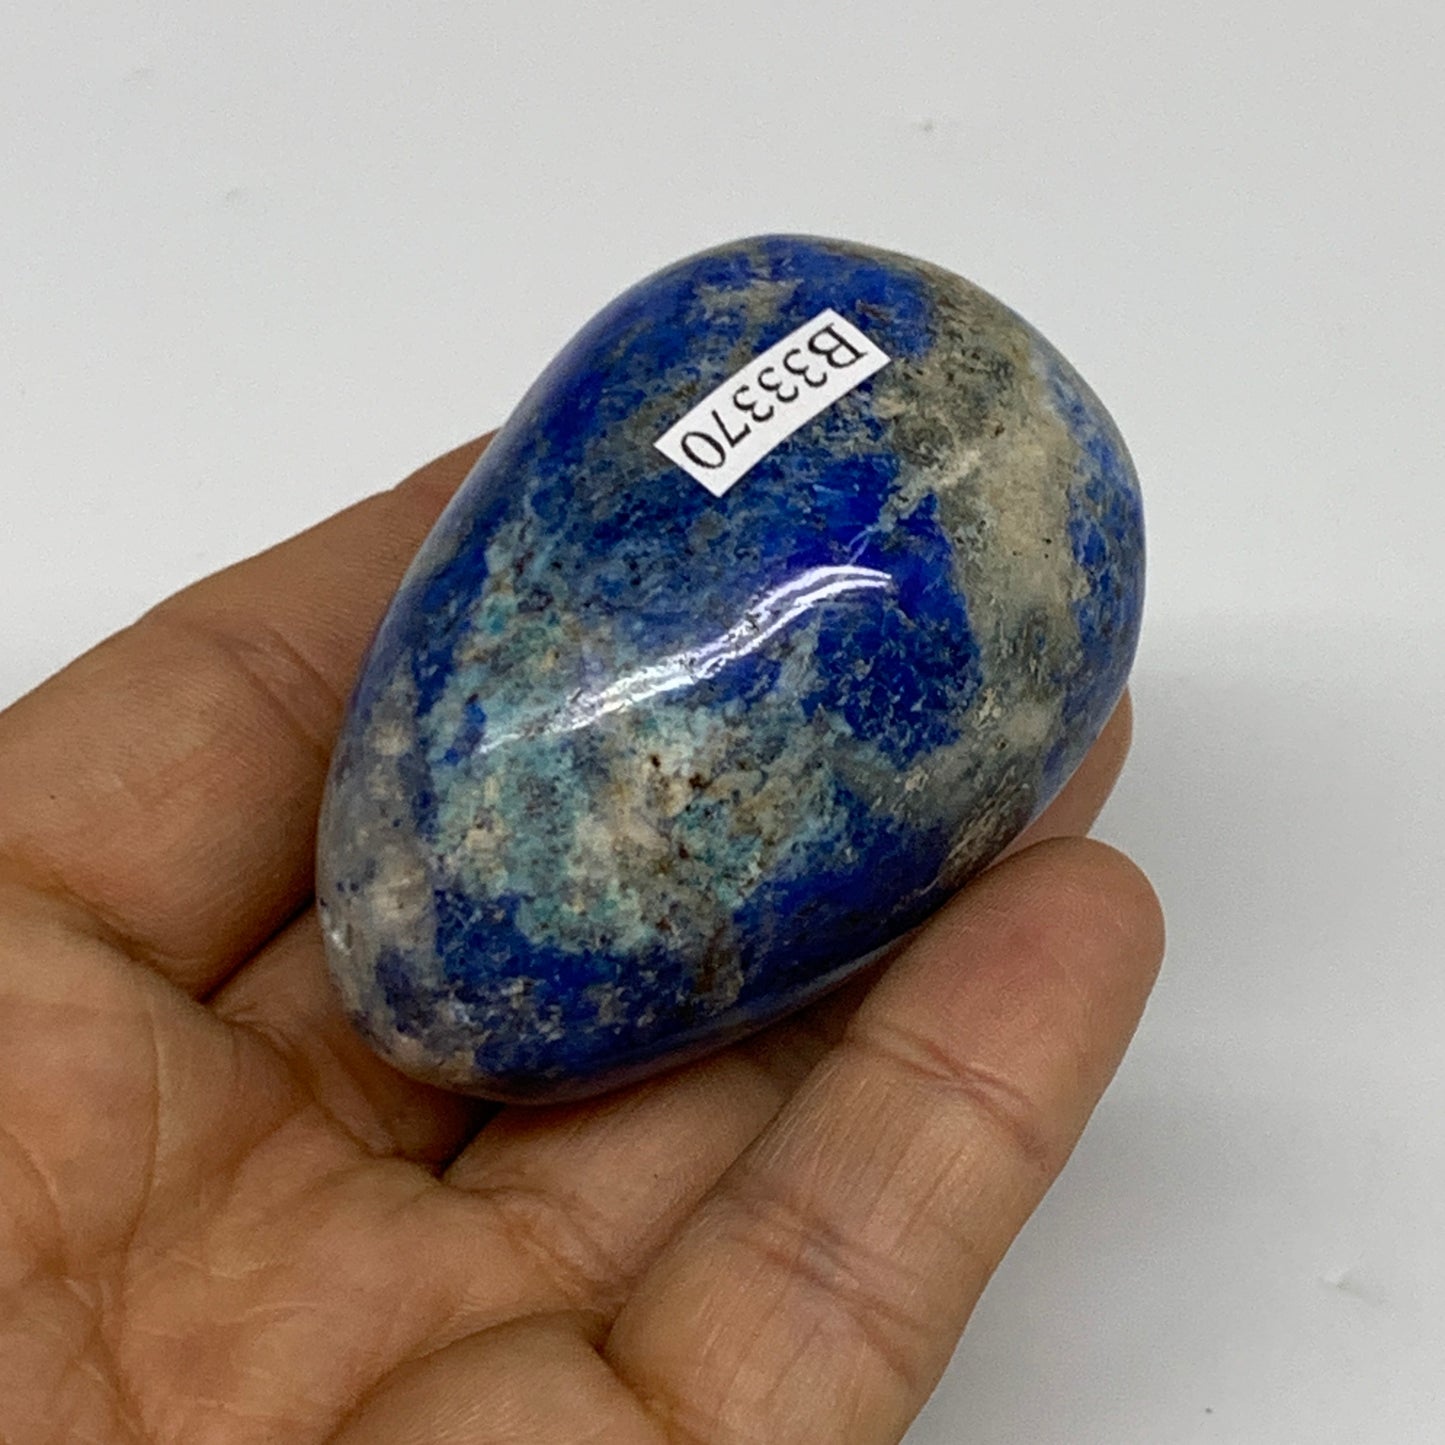 132.2g, 2.3"x1.5", Natural Lapis Lazuli Egg Polished, Clearance, B33370